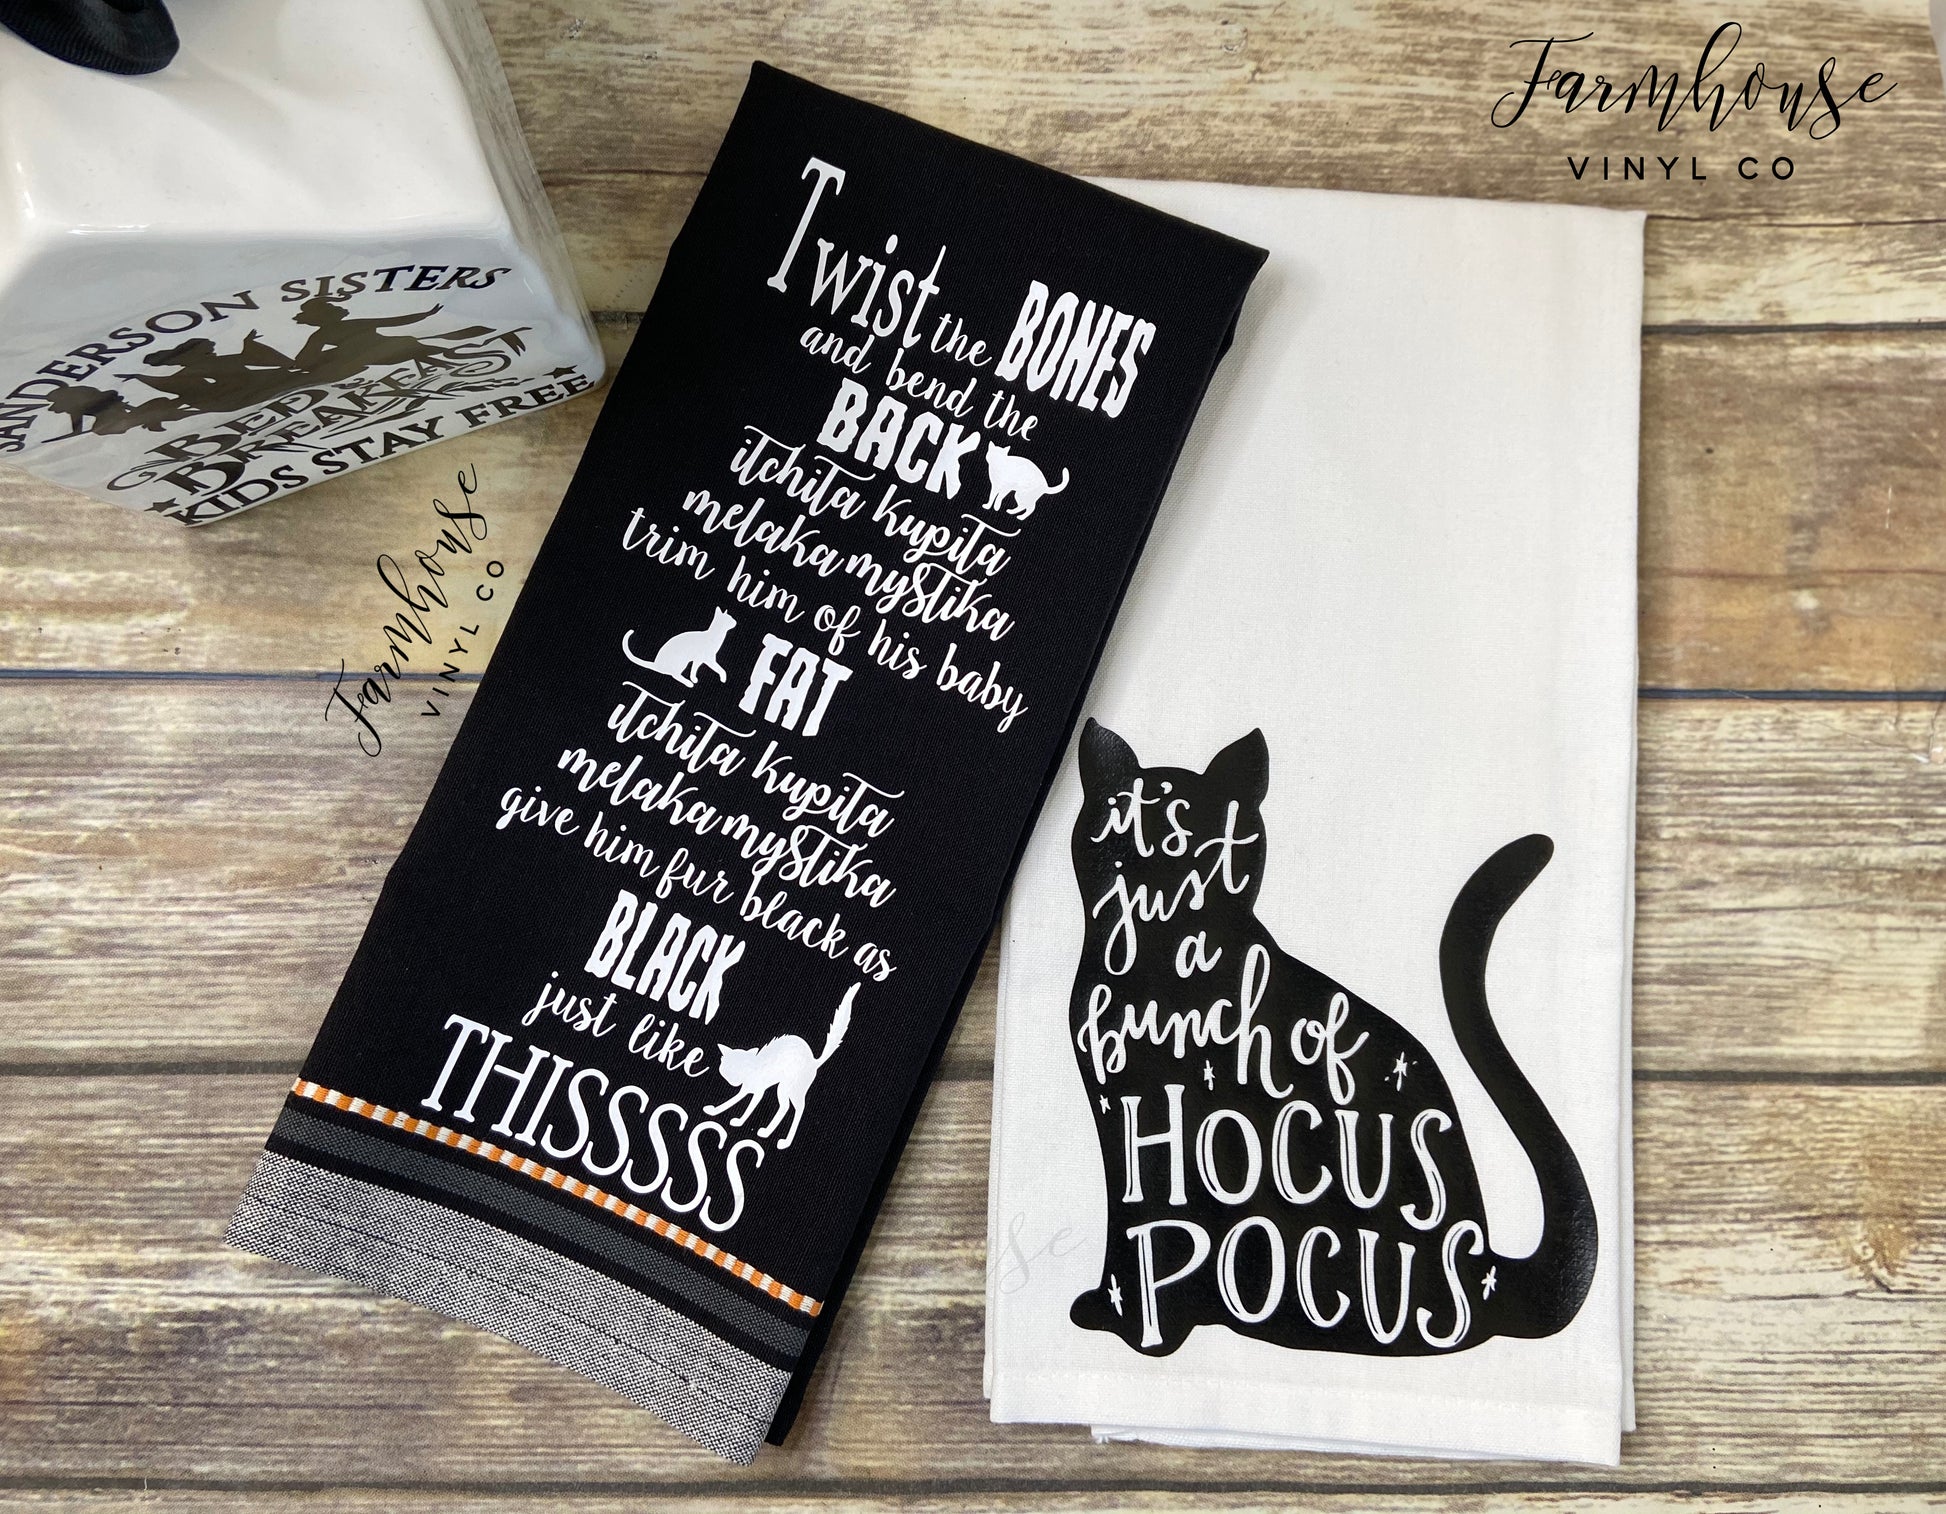 Hocus Pocus Halloween Towels - Farmhouse Vinyl Co